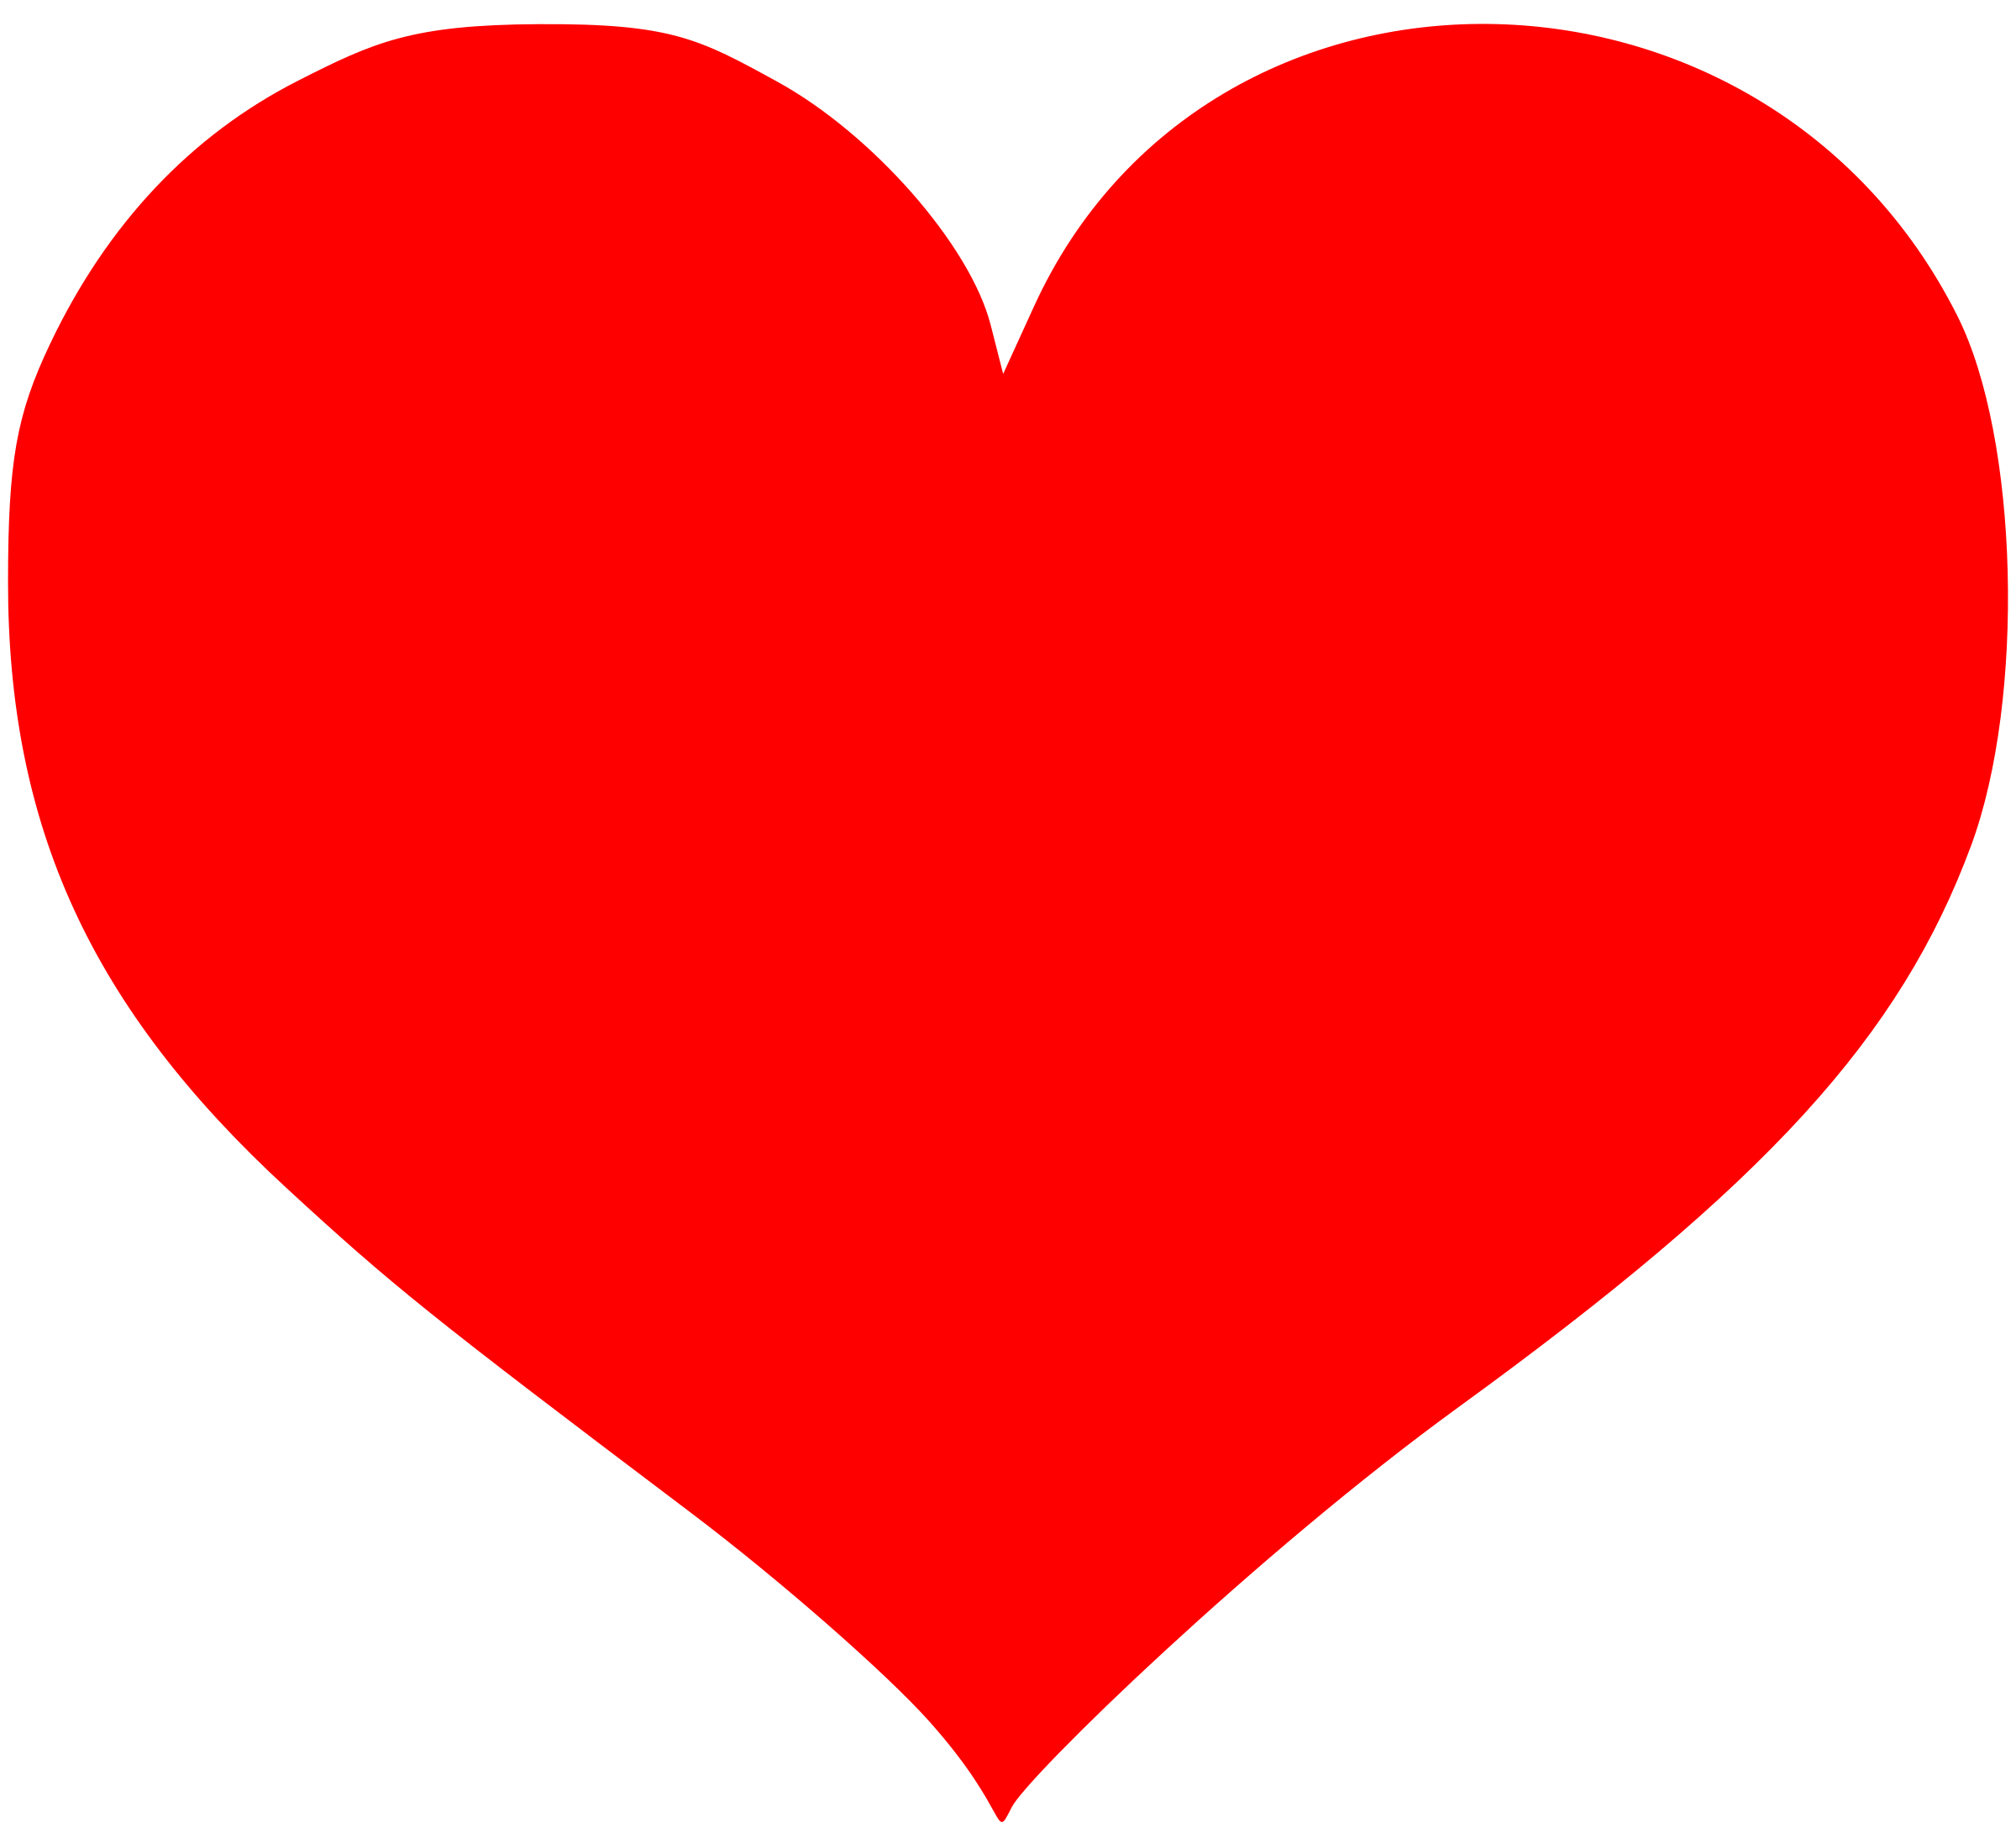 All Heart Logo - Heart Logo PNG Transparent & SVG Vector - Freebie Supply